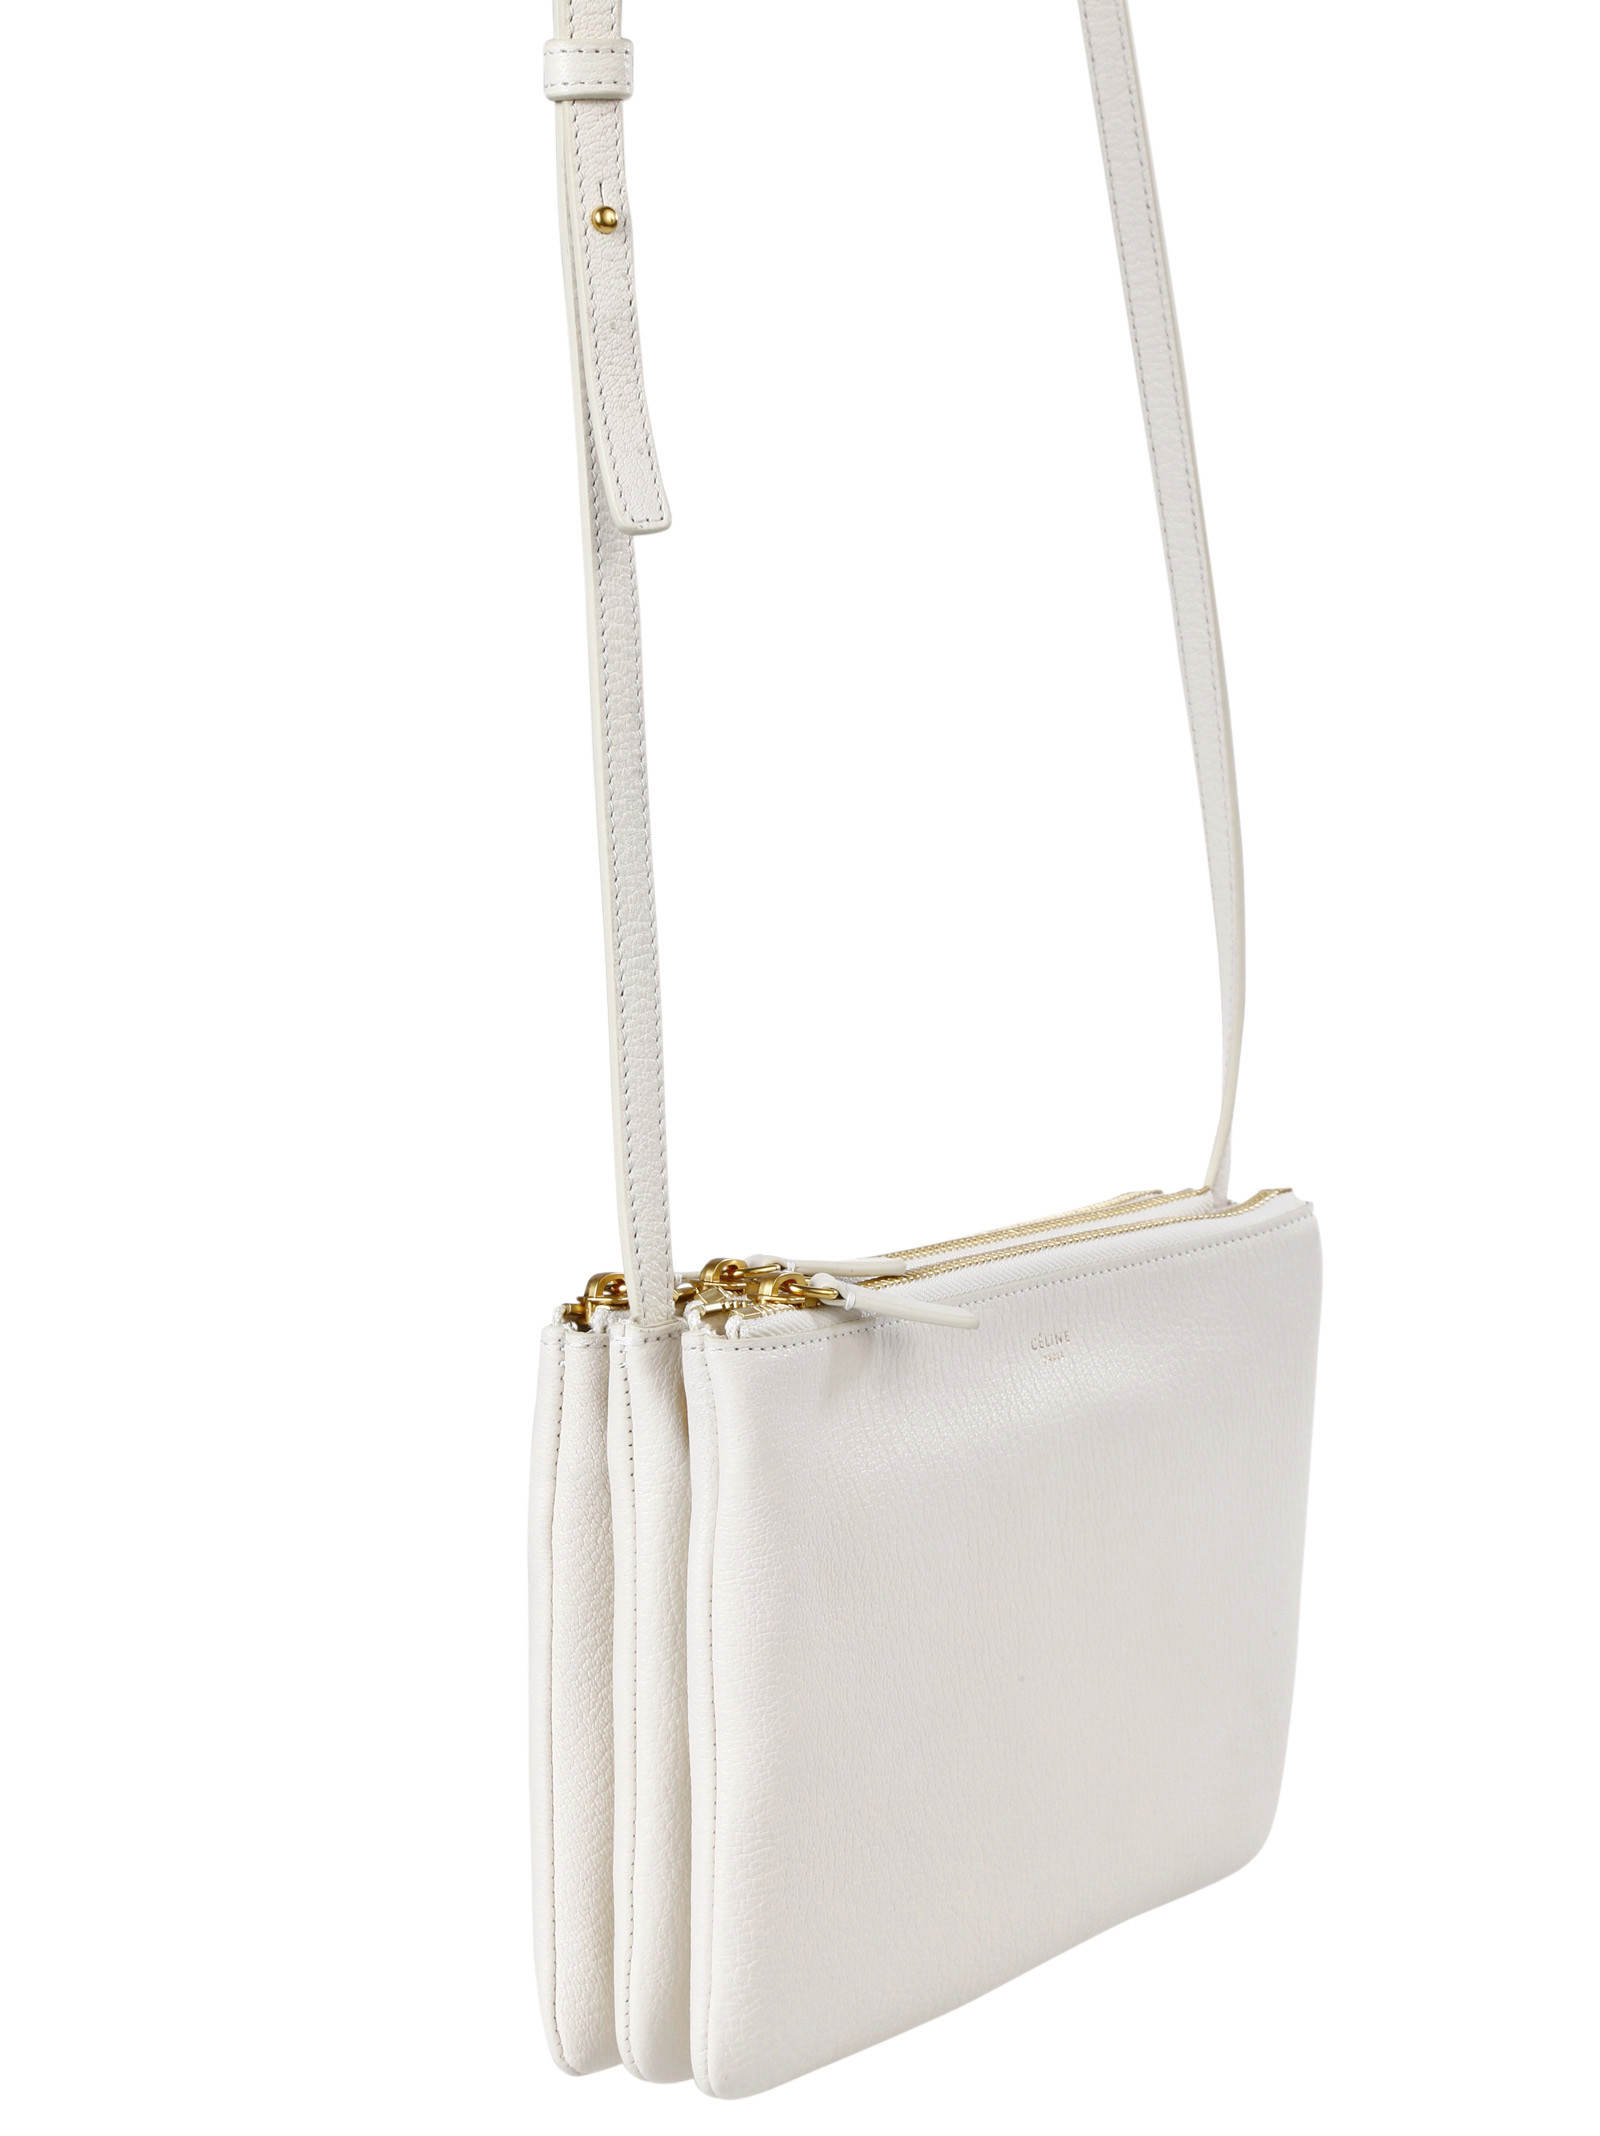 authentic celine mini luggage bag - celine white handbag